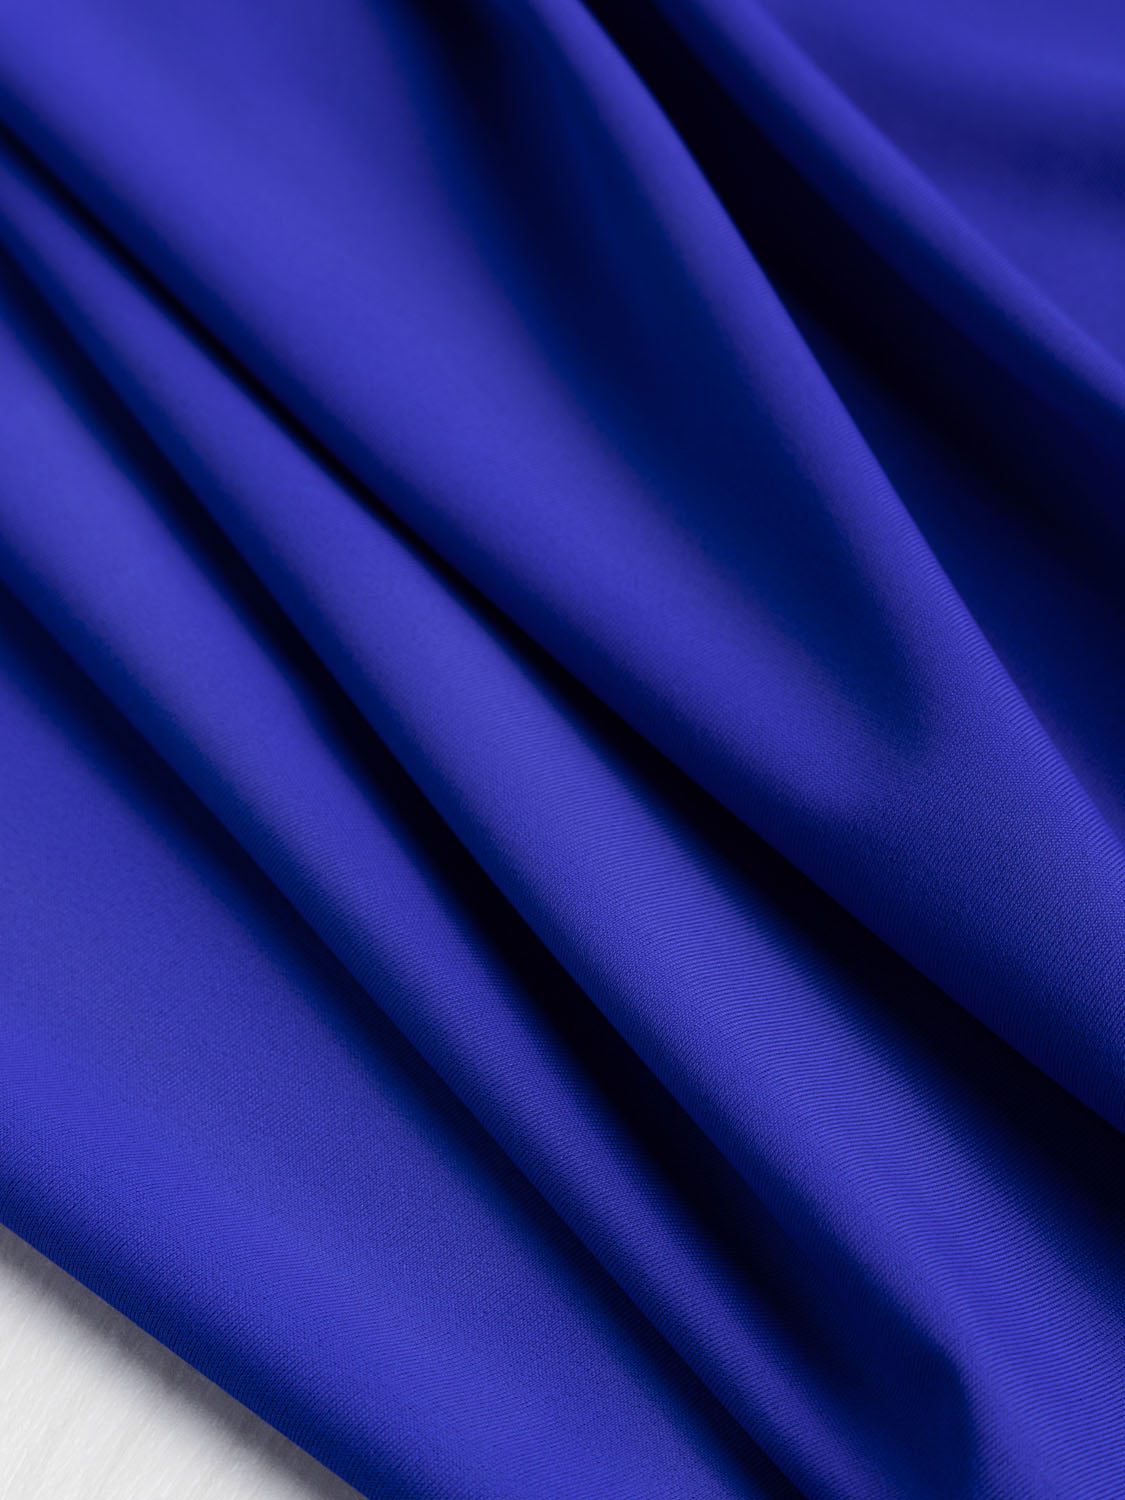 Ice Fabrics Nylon Spandex Fabric by The Yard - 60 Wide Spandex Swimwear  Fabric - 4 Way Stretch